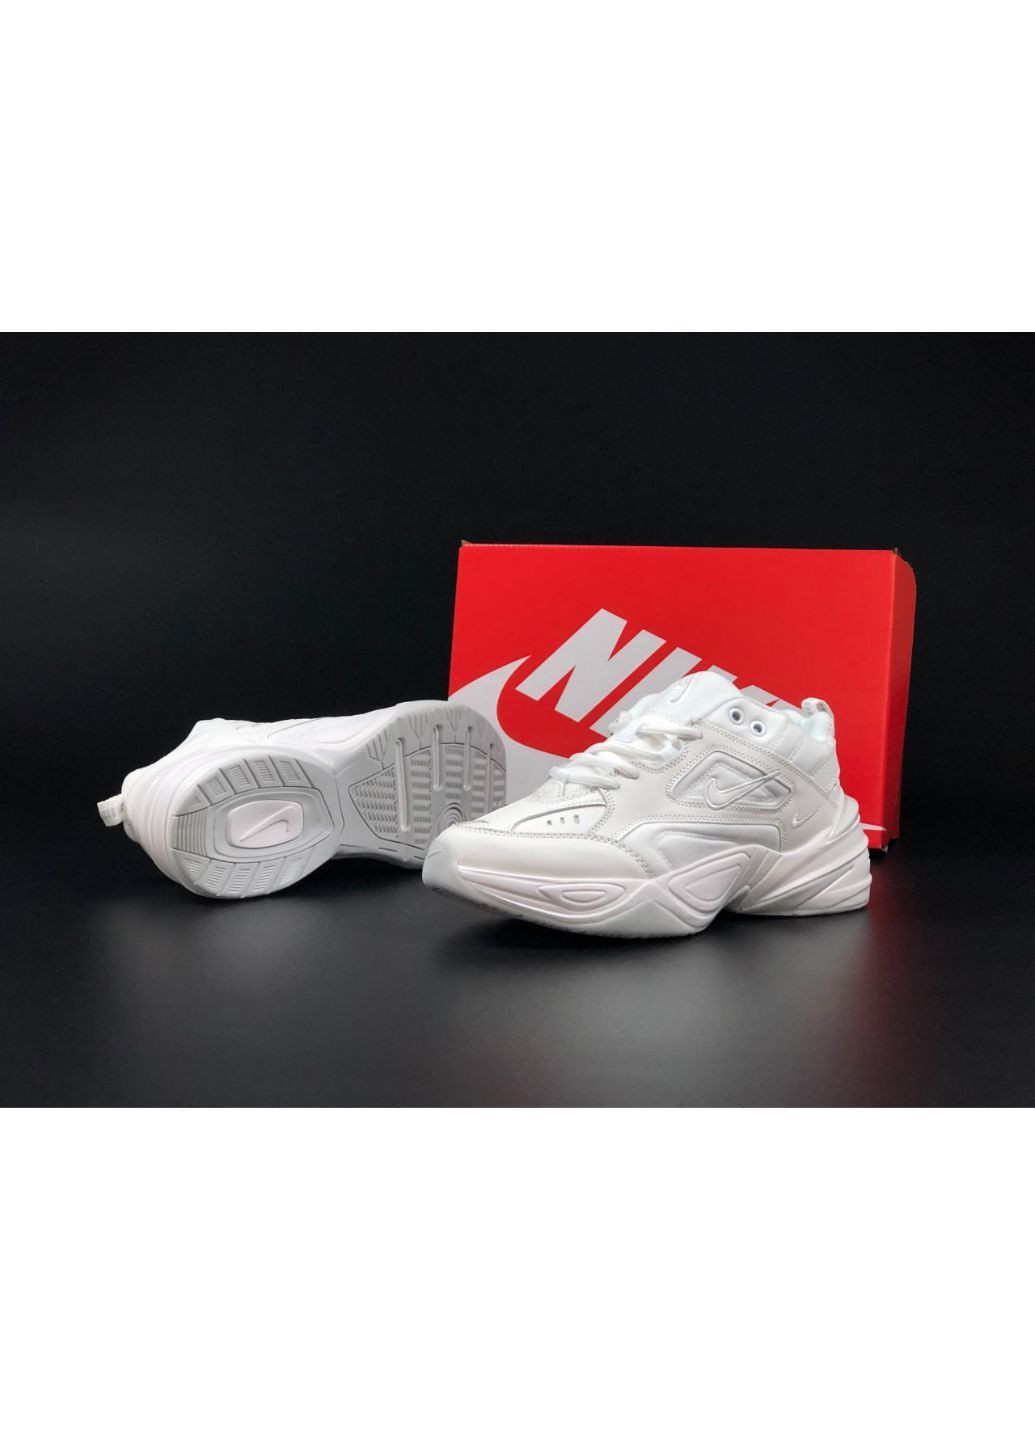 Белые демисезонные мужские кроссовки белые «no name» Nike M2k Tekno